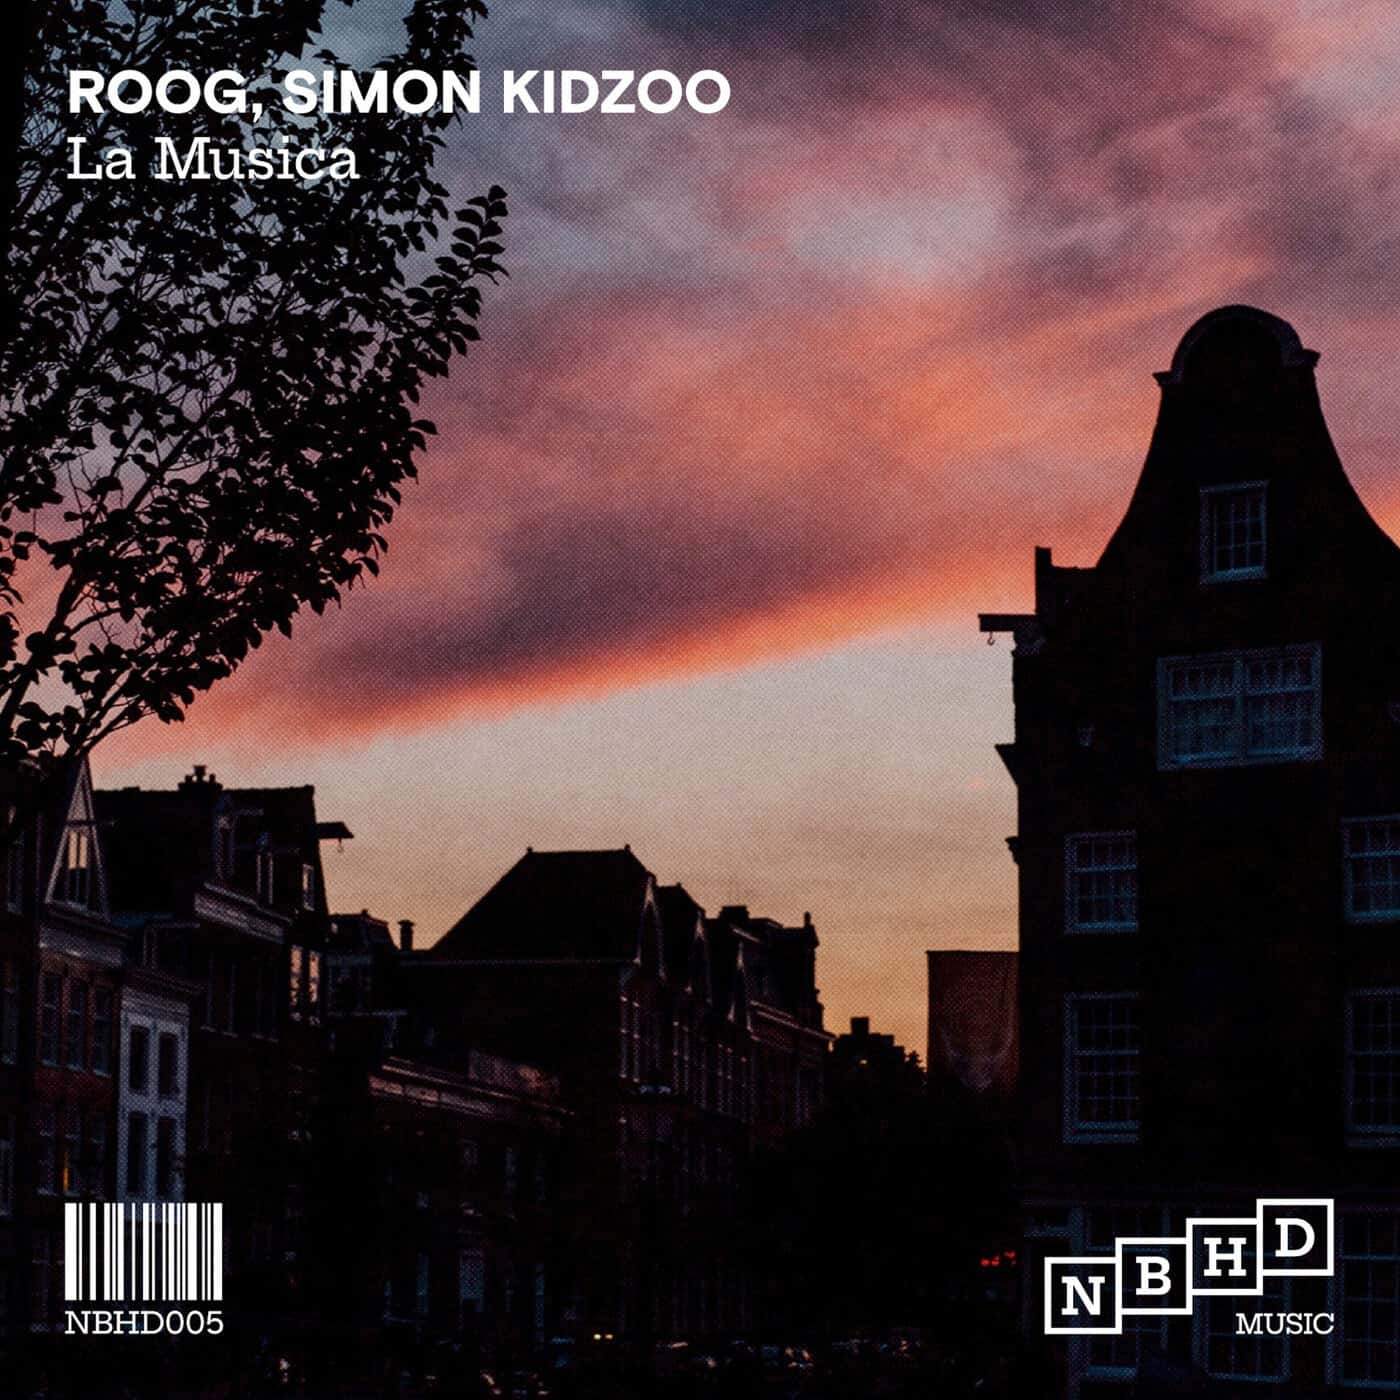 image cover: La Musica by Roog, Simon Kidzoo on Neighborhood Music